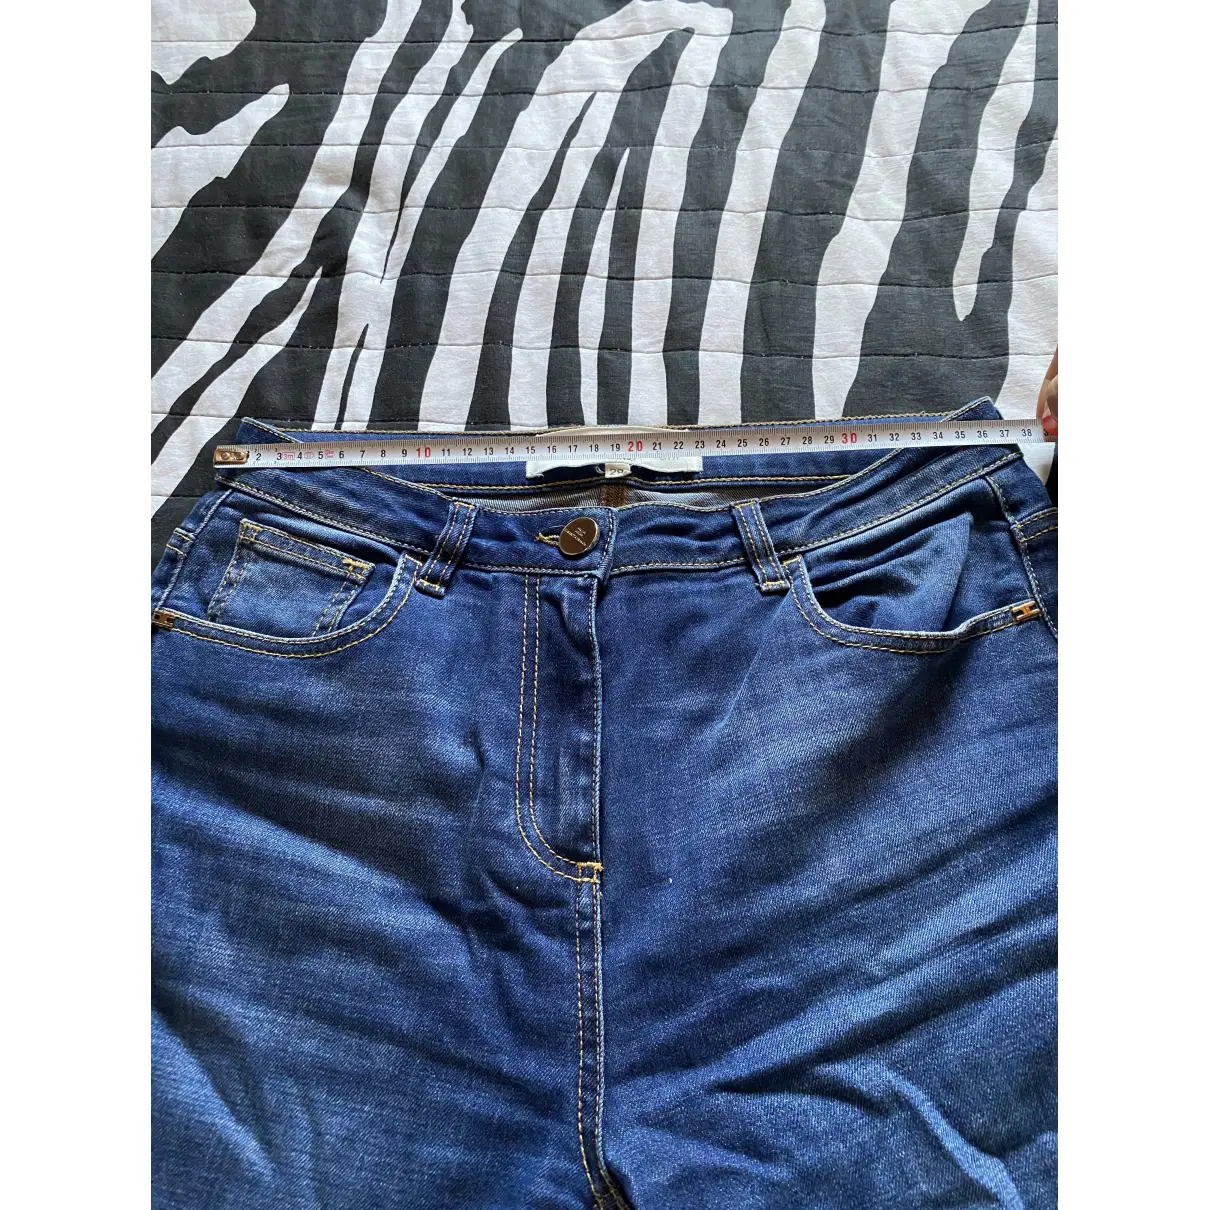 Slim jeans Elisabetta Franchi